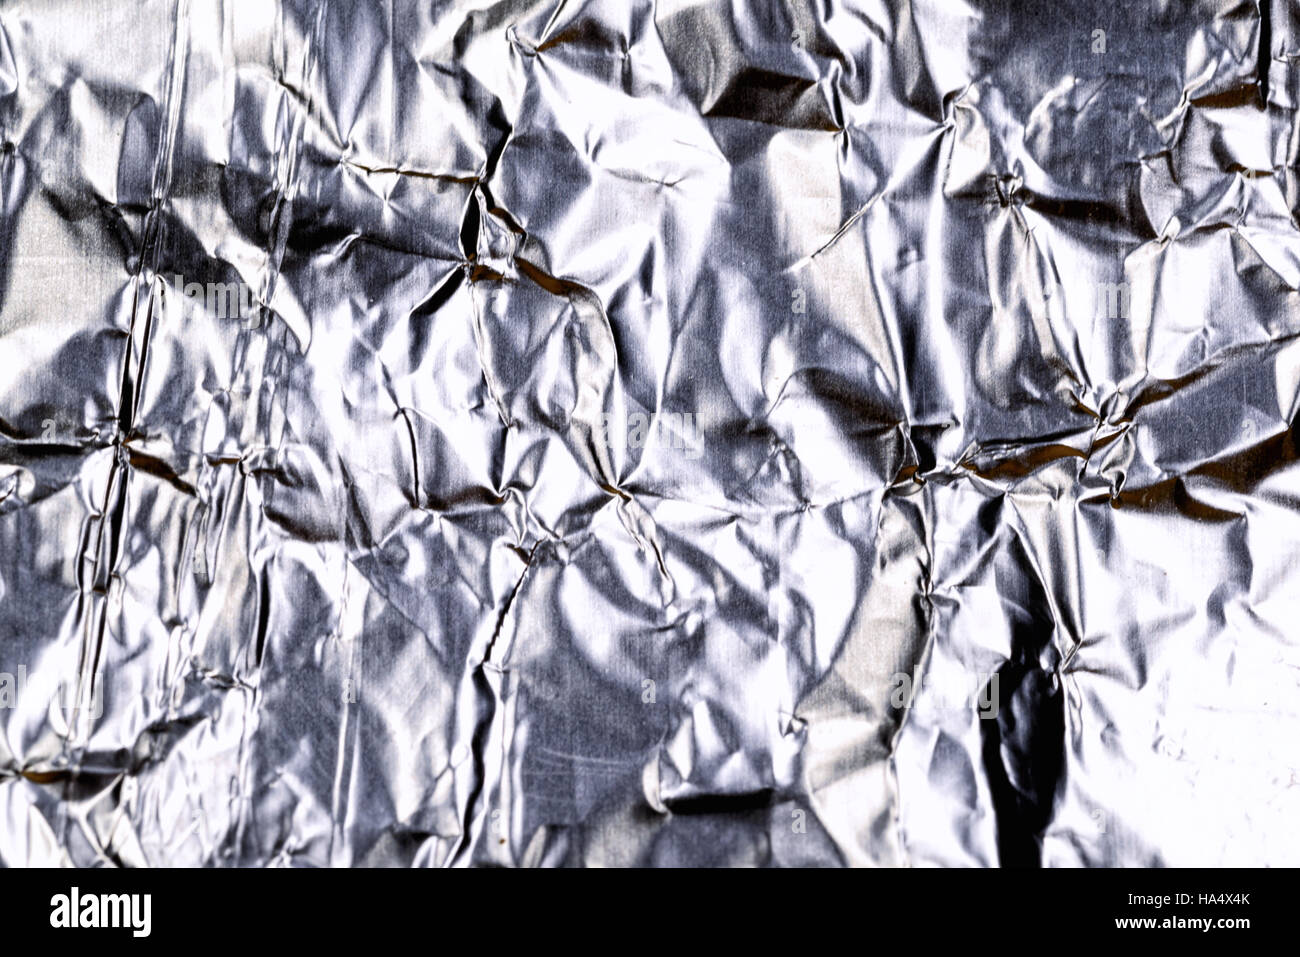 https://c8.alamy.com/comp/HA4X4K/crumpled-aluminum-tin-foil-texture-with-light-reflections-on-the-shiny-HA4X4K.jpg